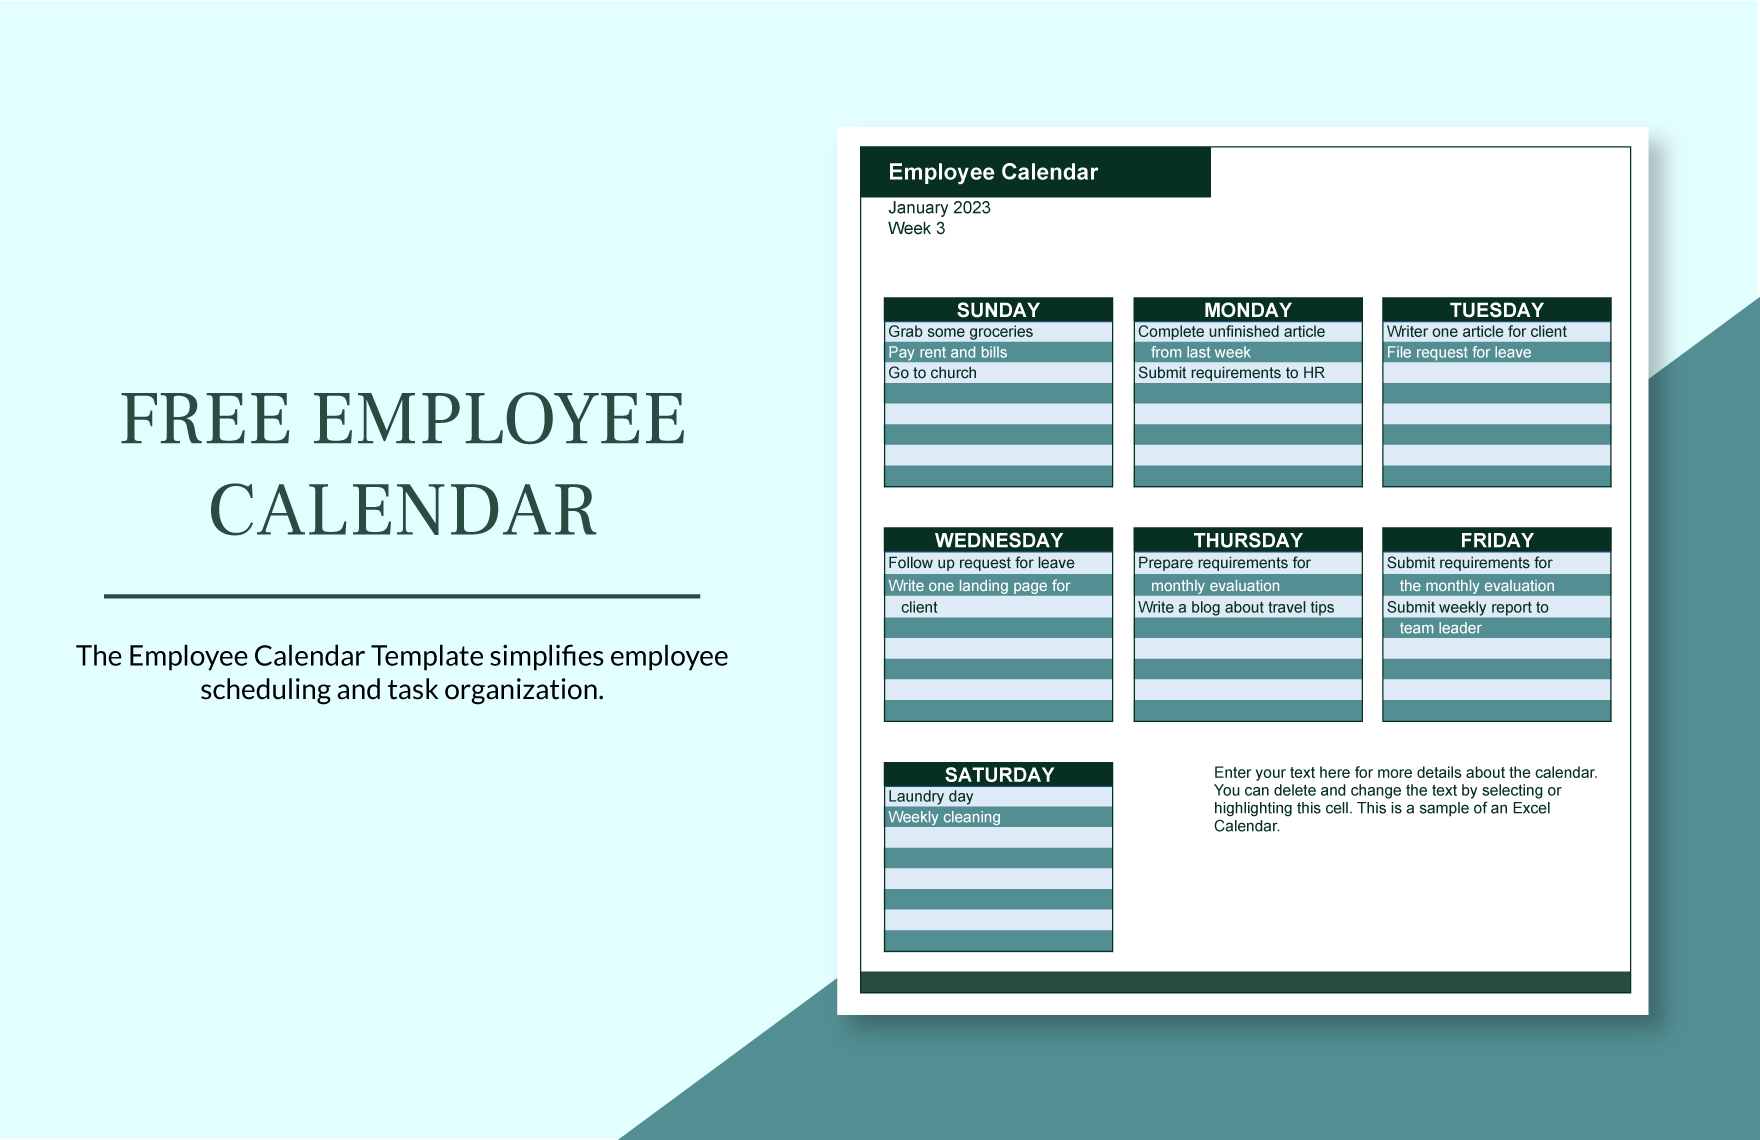 Employee Calendar